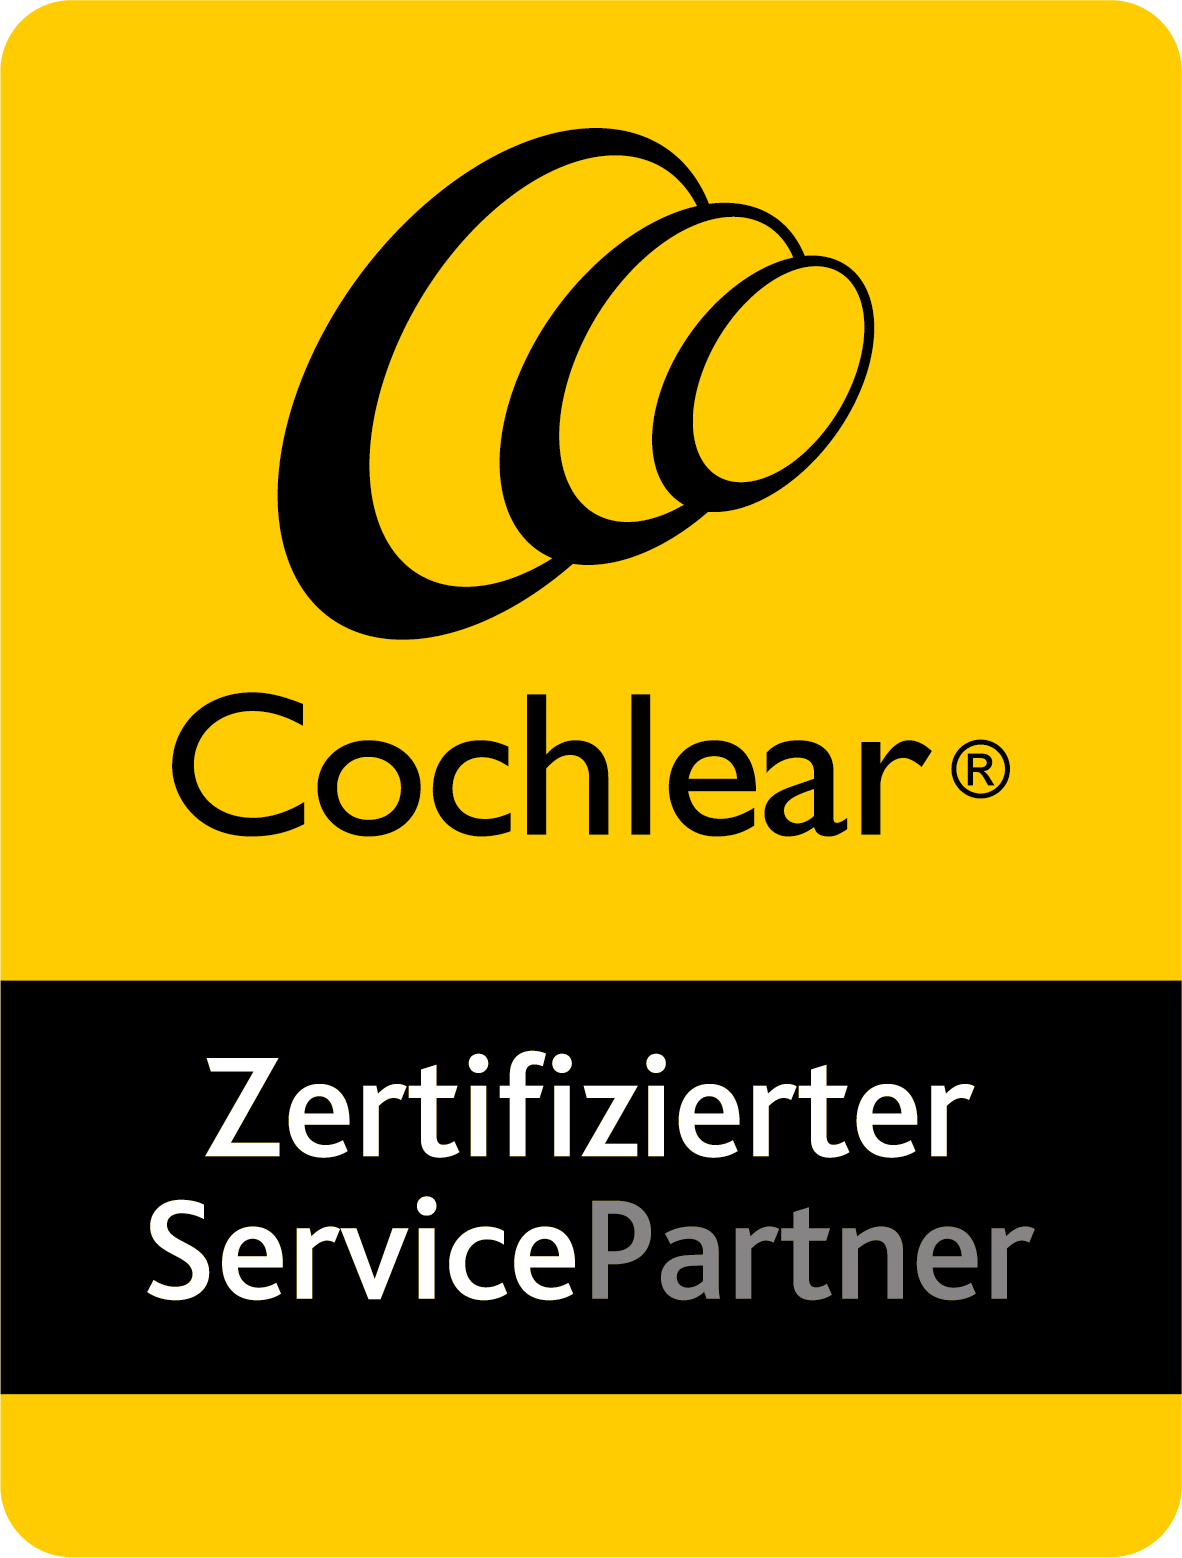 Zertifizierter ServicePartner